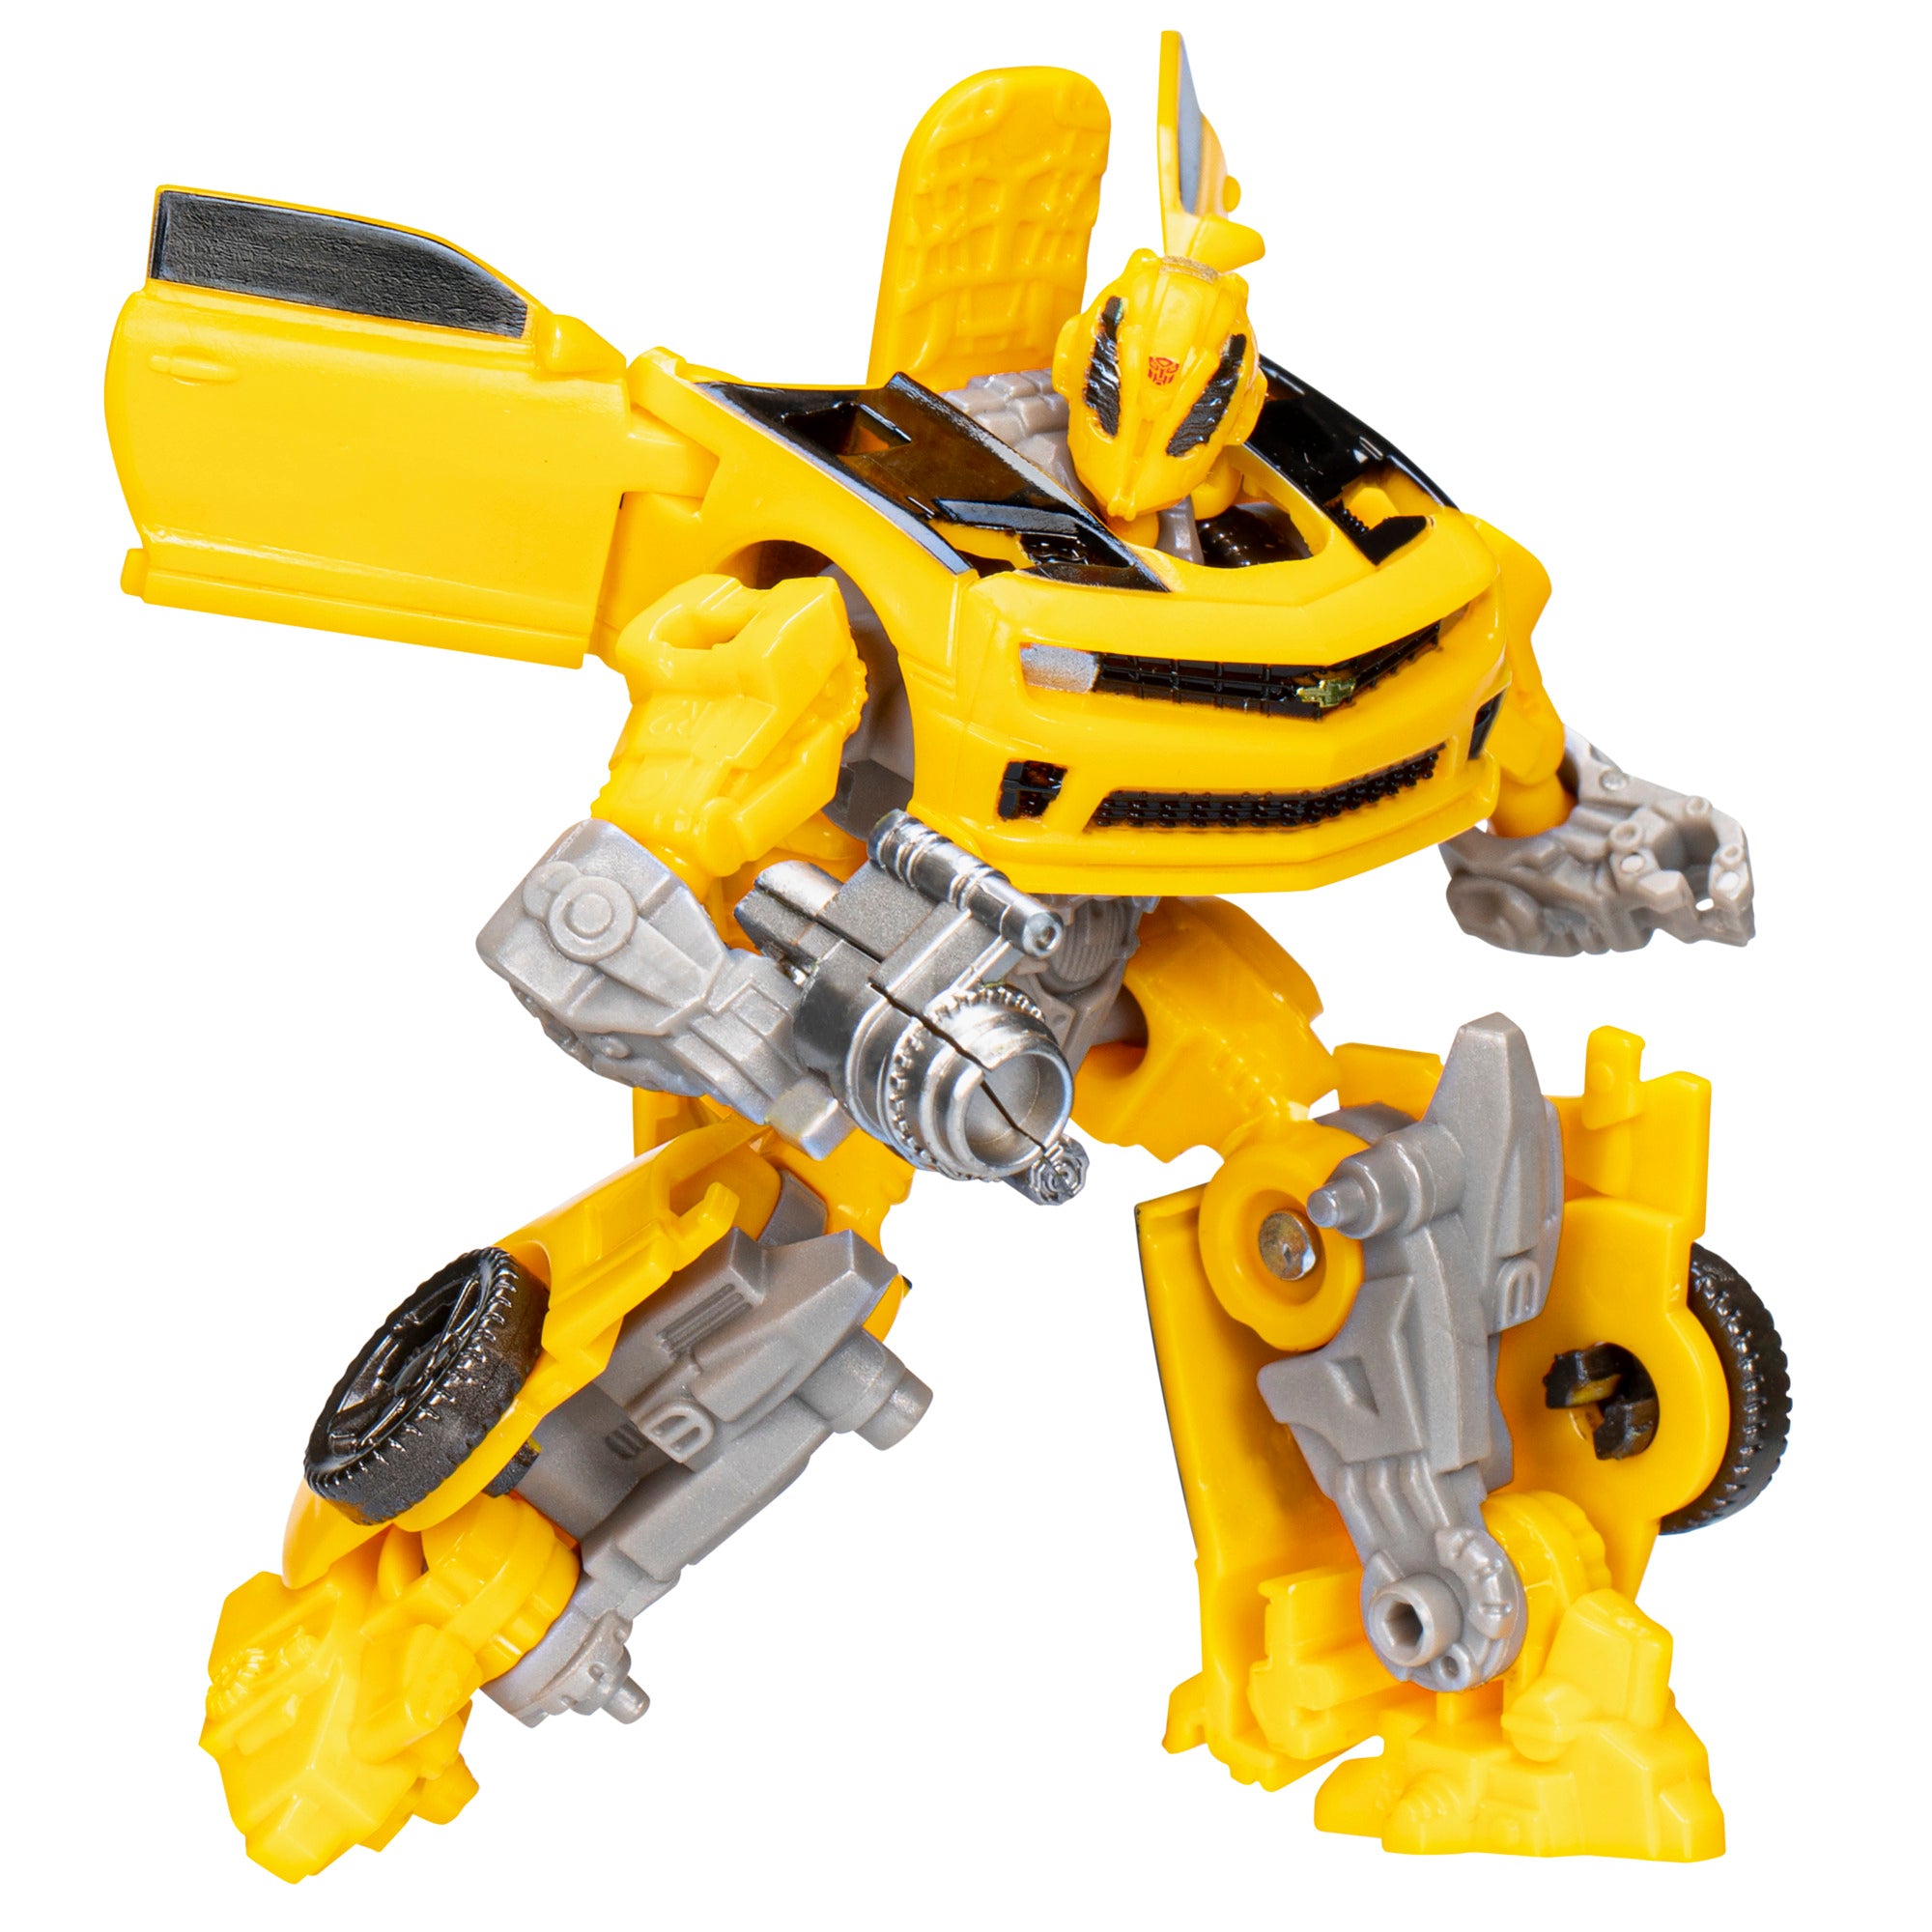 Transformers Studio Series (Dark of the Moon) Core Bumblebee